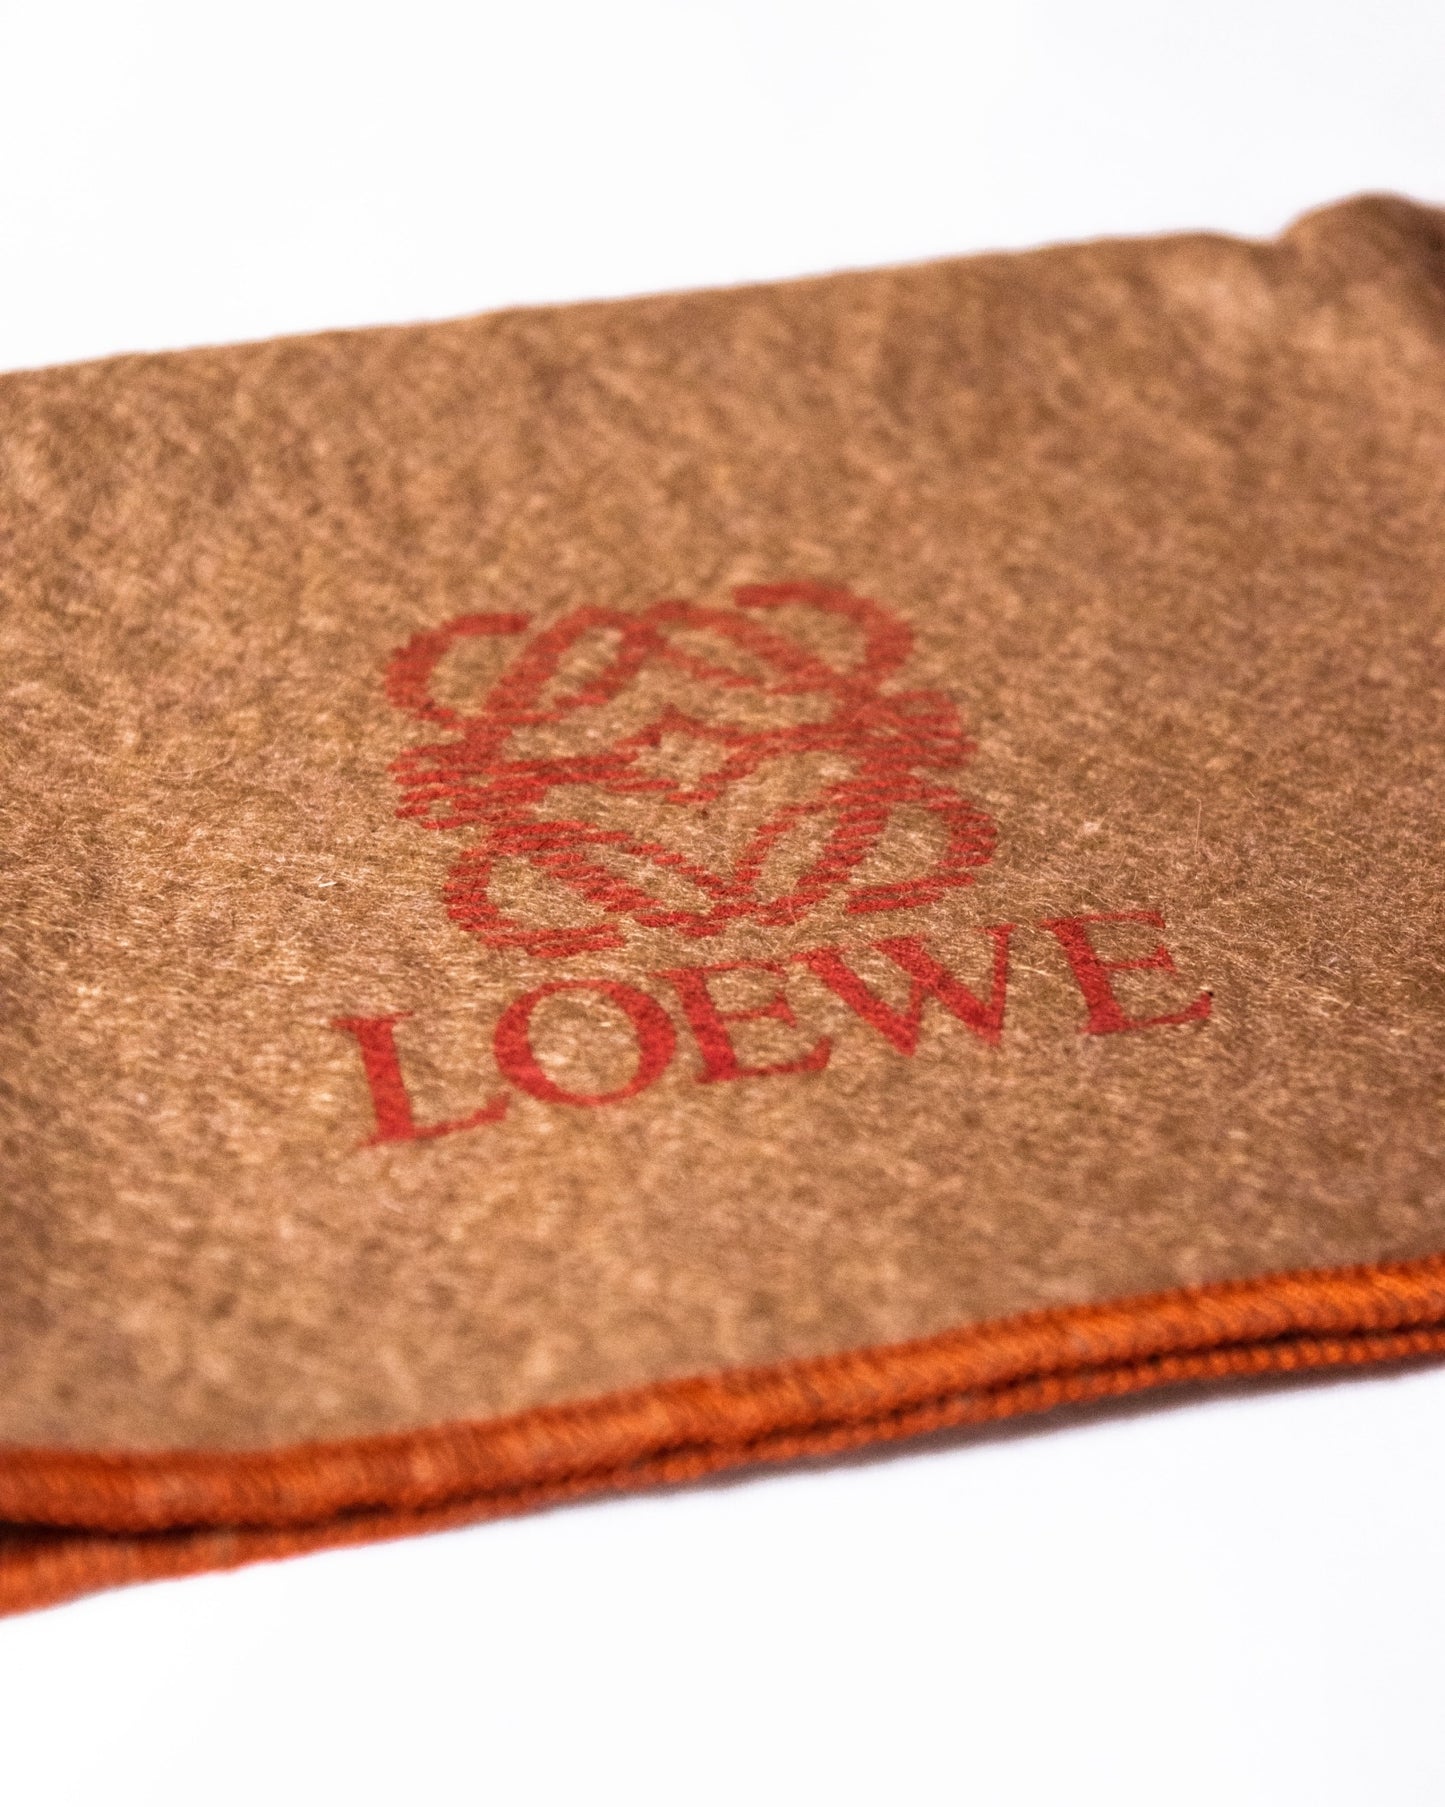 "LOEWE" Red-Eyed Leather Bangle